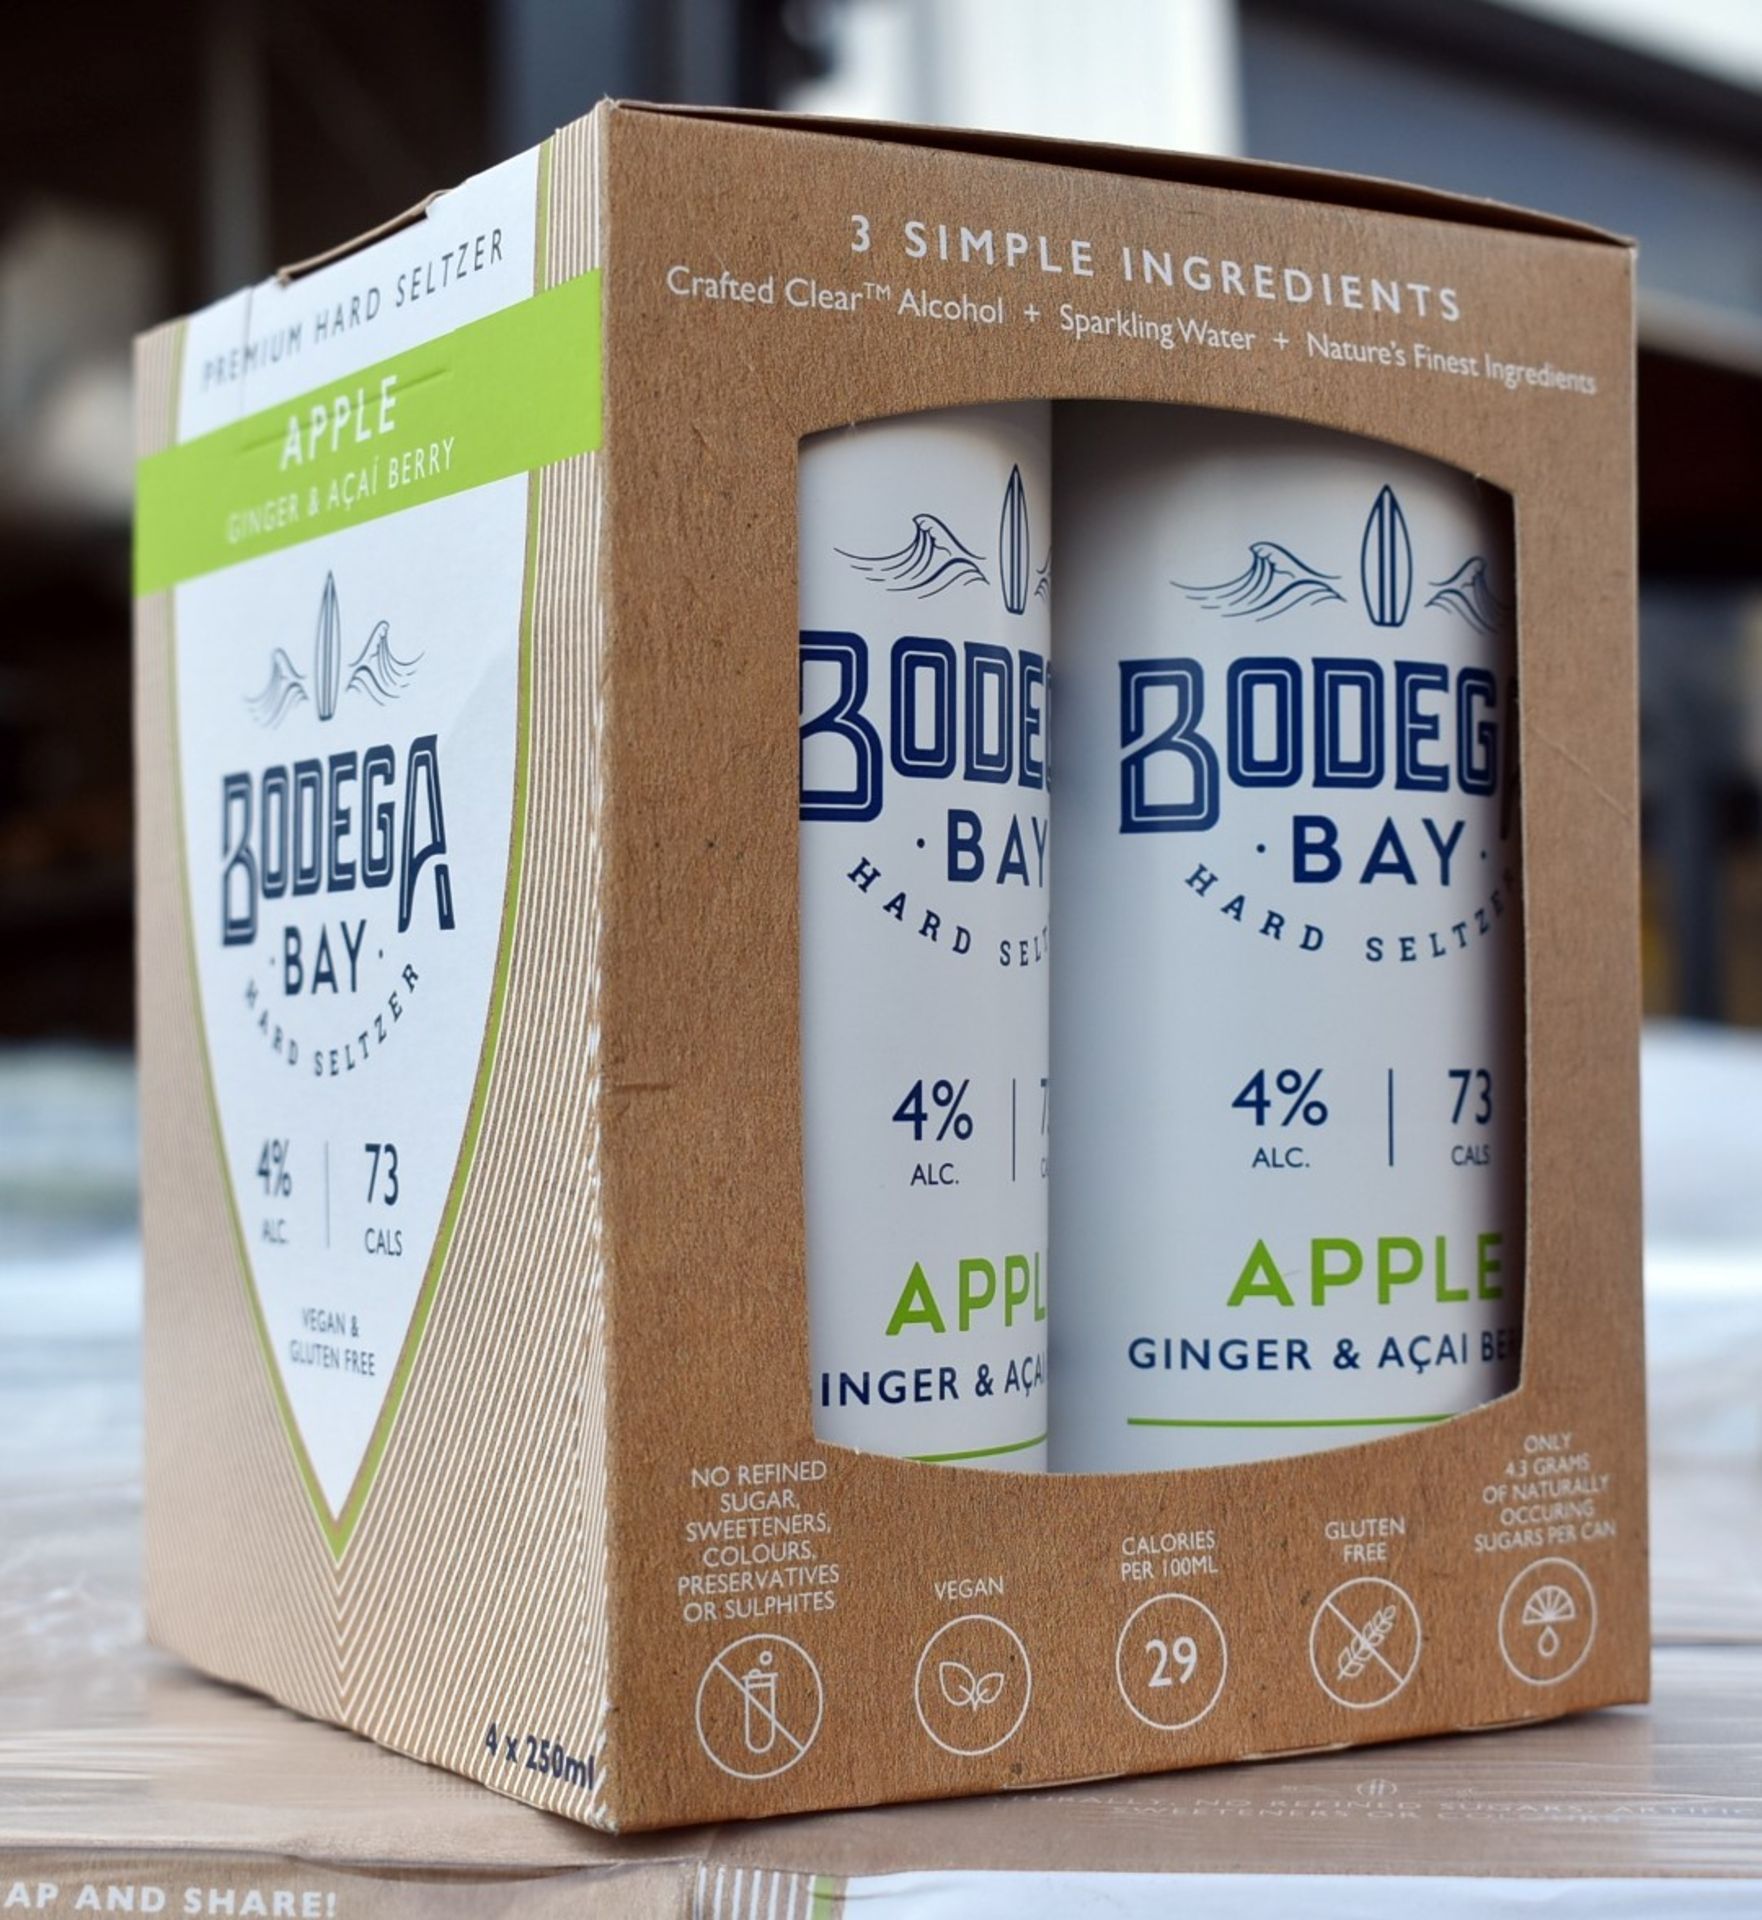 24 x Bodega Bay Hard Seltzer 250ml Alcoholic Sparkling Water Drinks - Apple Ginger & Acai Berry - 4% - Image 7 of 9